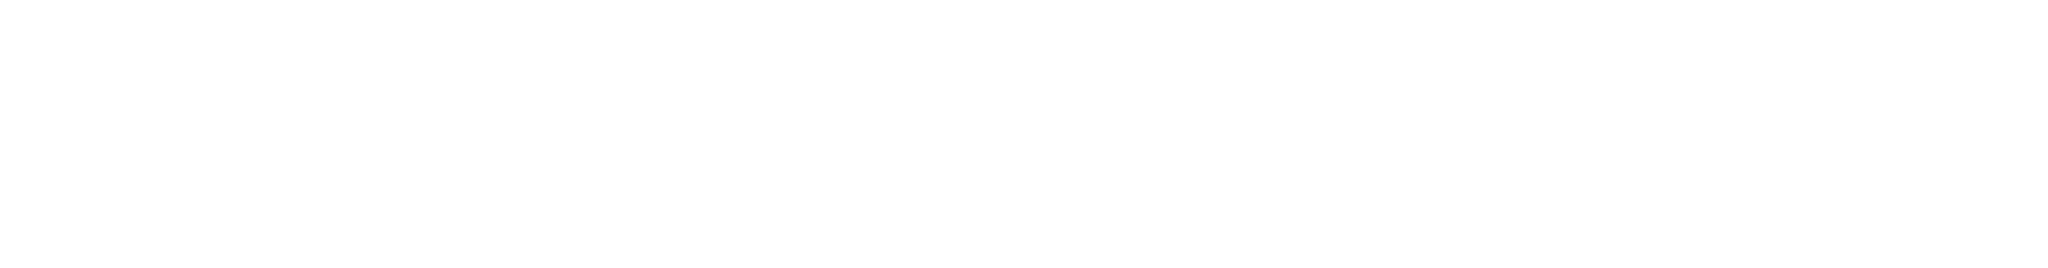 intouchCONSULT logo